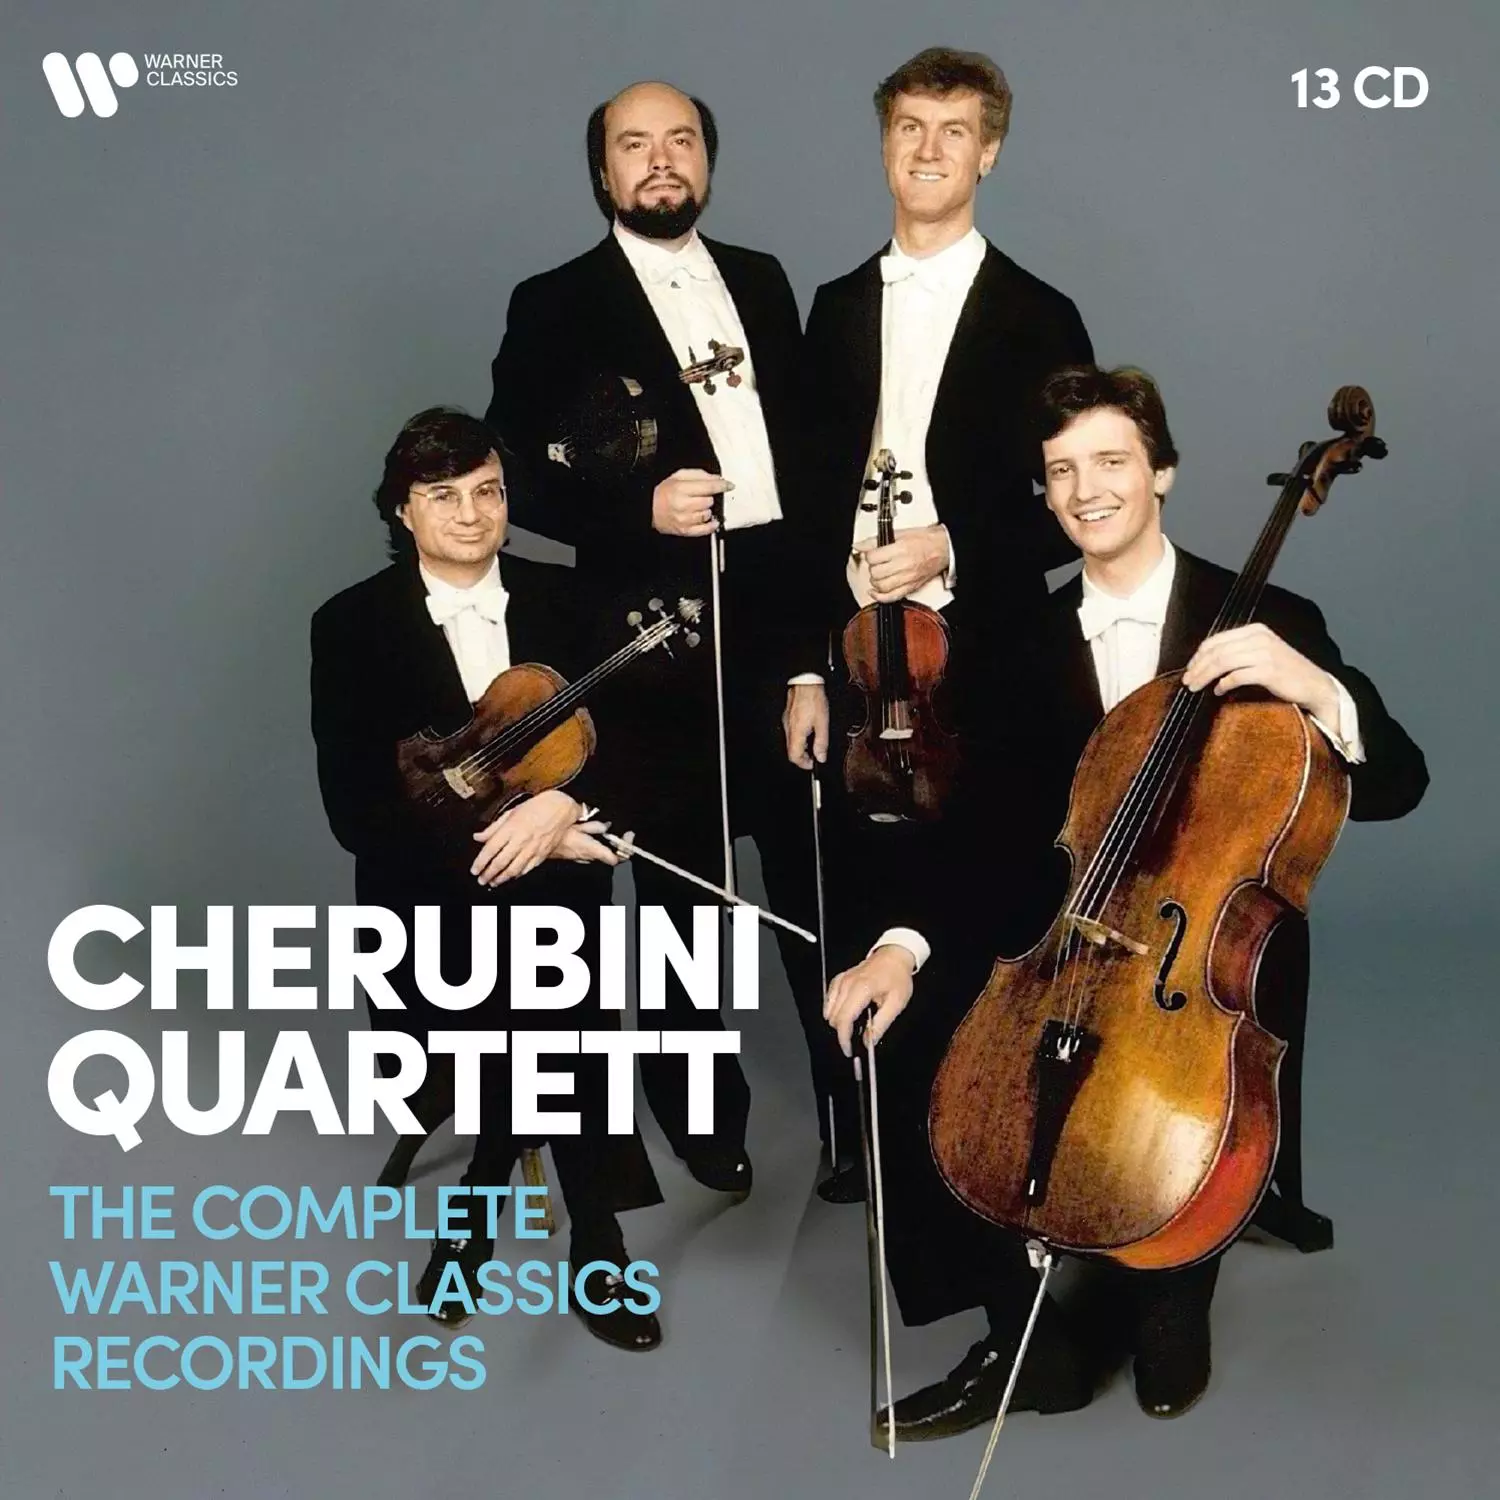 Cherubini Quartet Complete Warner Classics Recordings